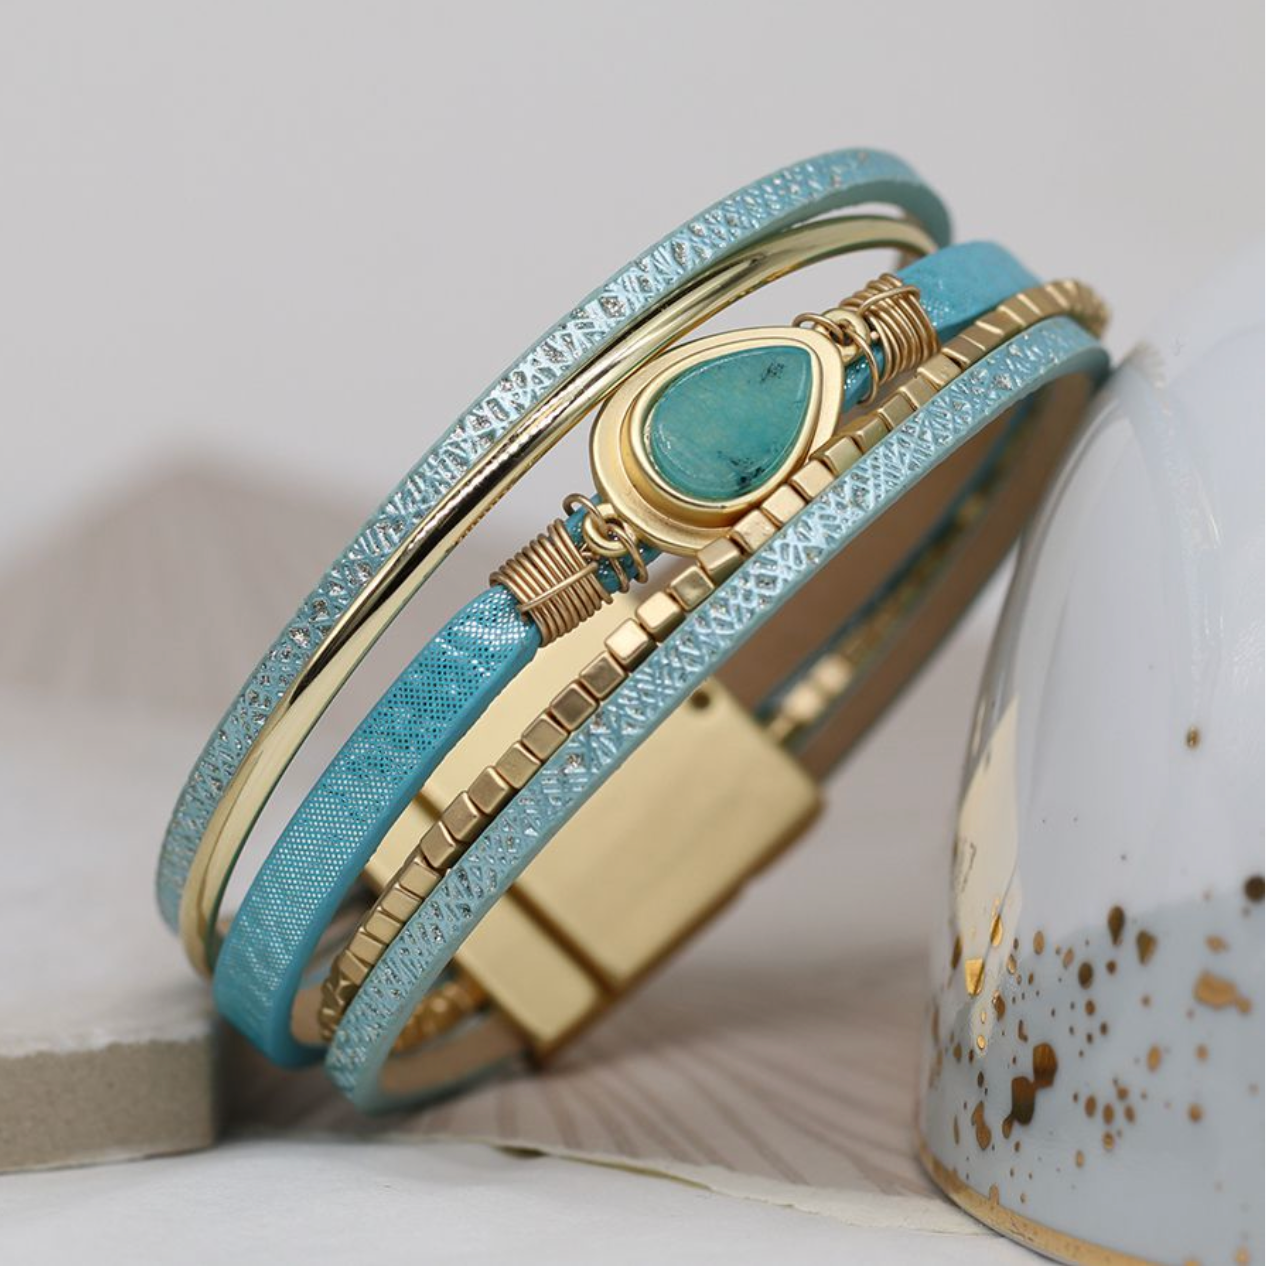 Aqua leather and golden bracelet with aqua teardrop stone